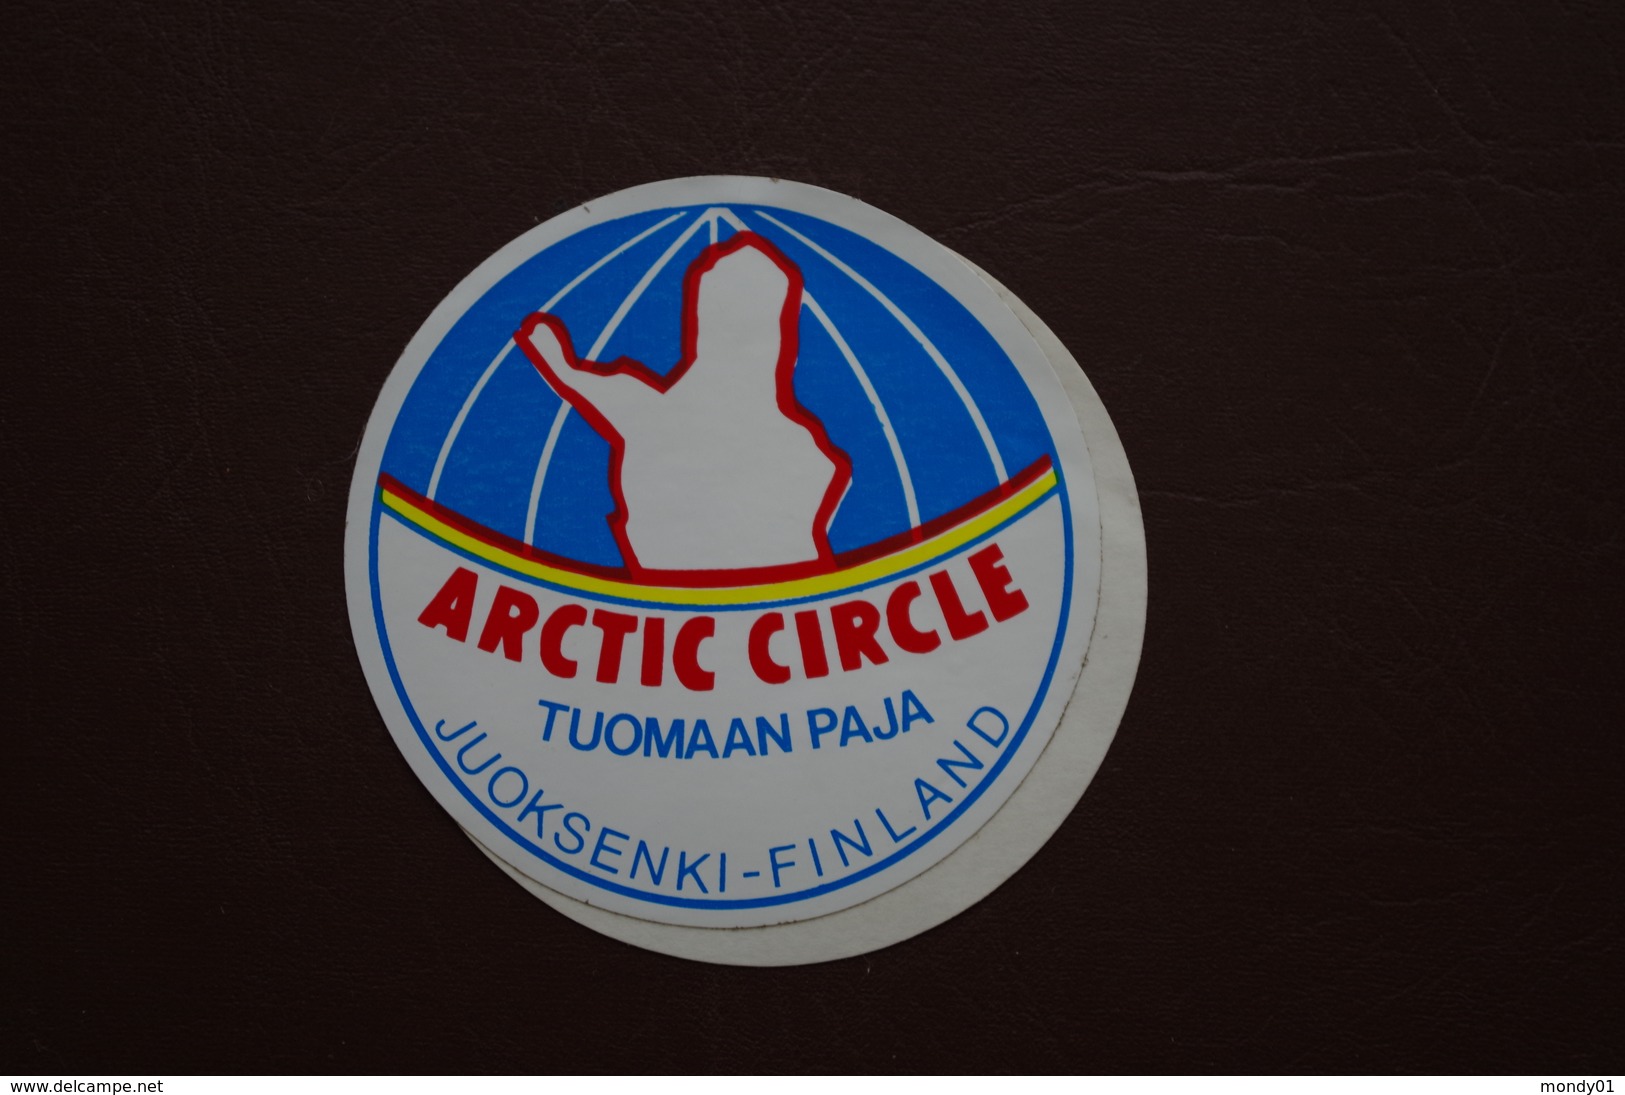 6-177 Autocollant Arctic Circle Cercle Polaire Finlande Juoksenki Tuomaan Paja Mesure D'Arc Meridien - Events & Commemorations